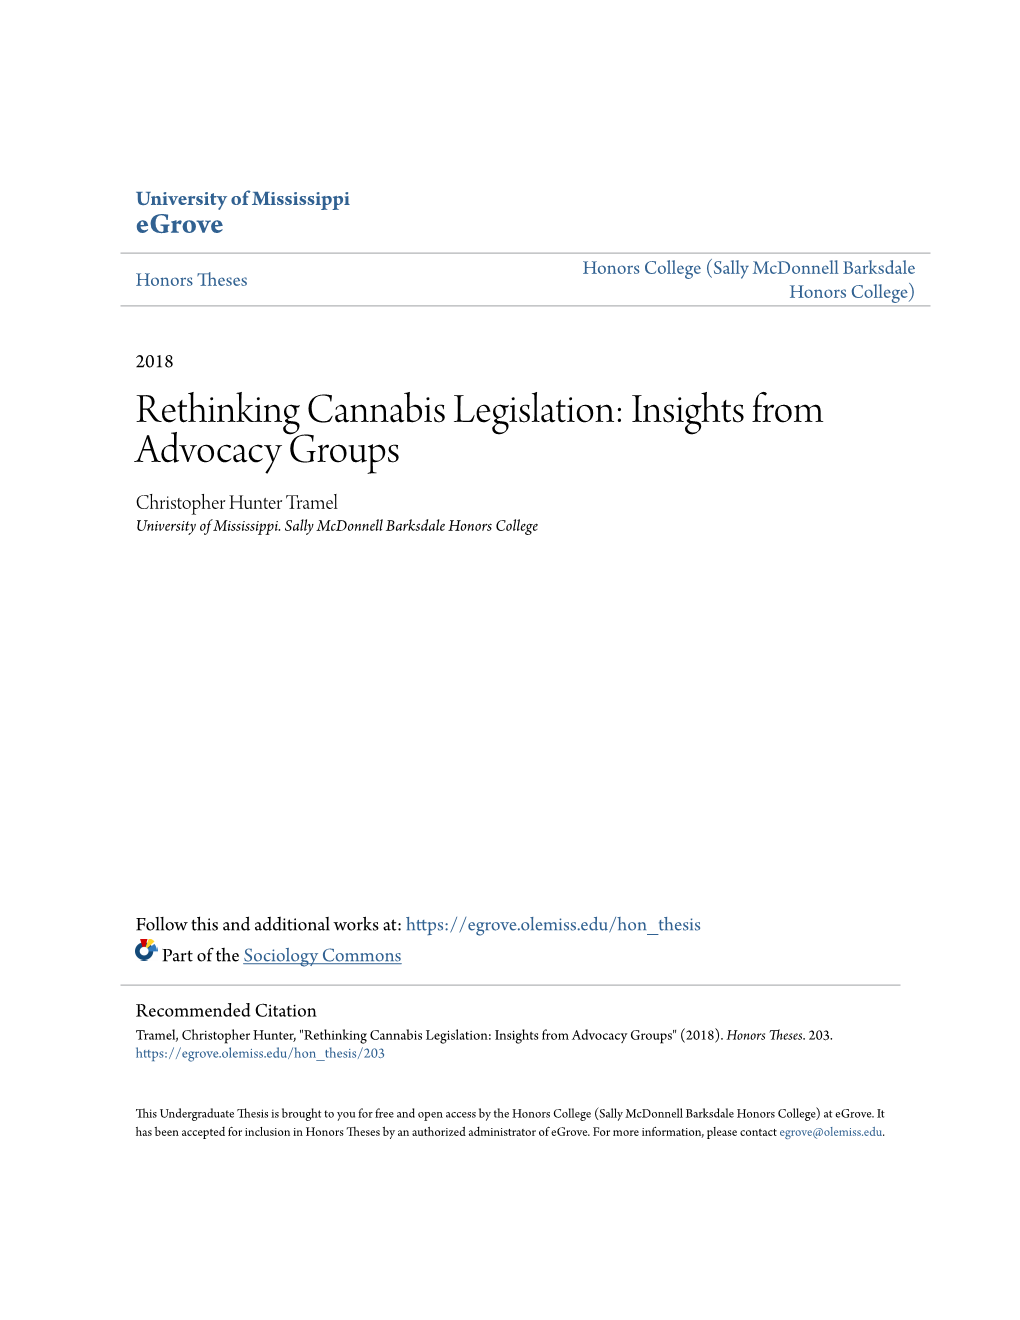 Rethinking Cannabis Legislation: Insights from Advocacy Groups Christopher Hunter Tramel University of Mississippi